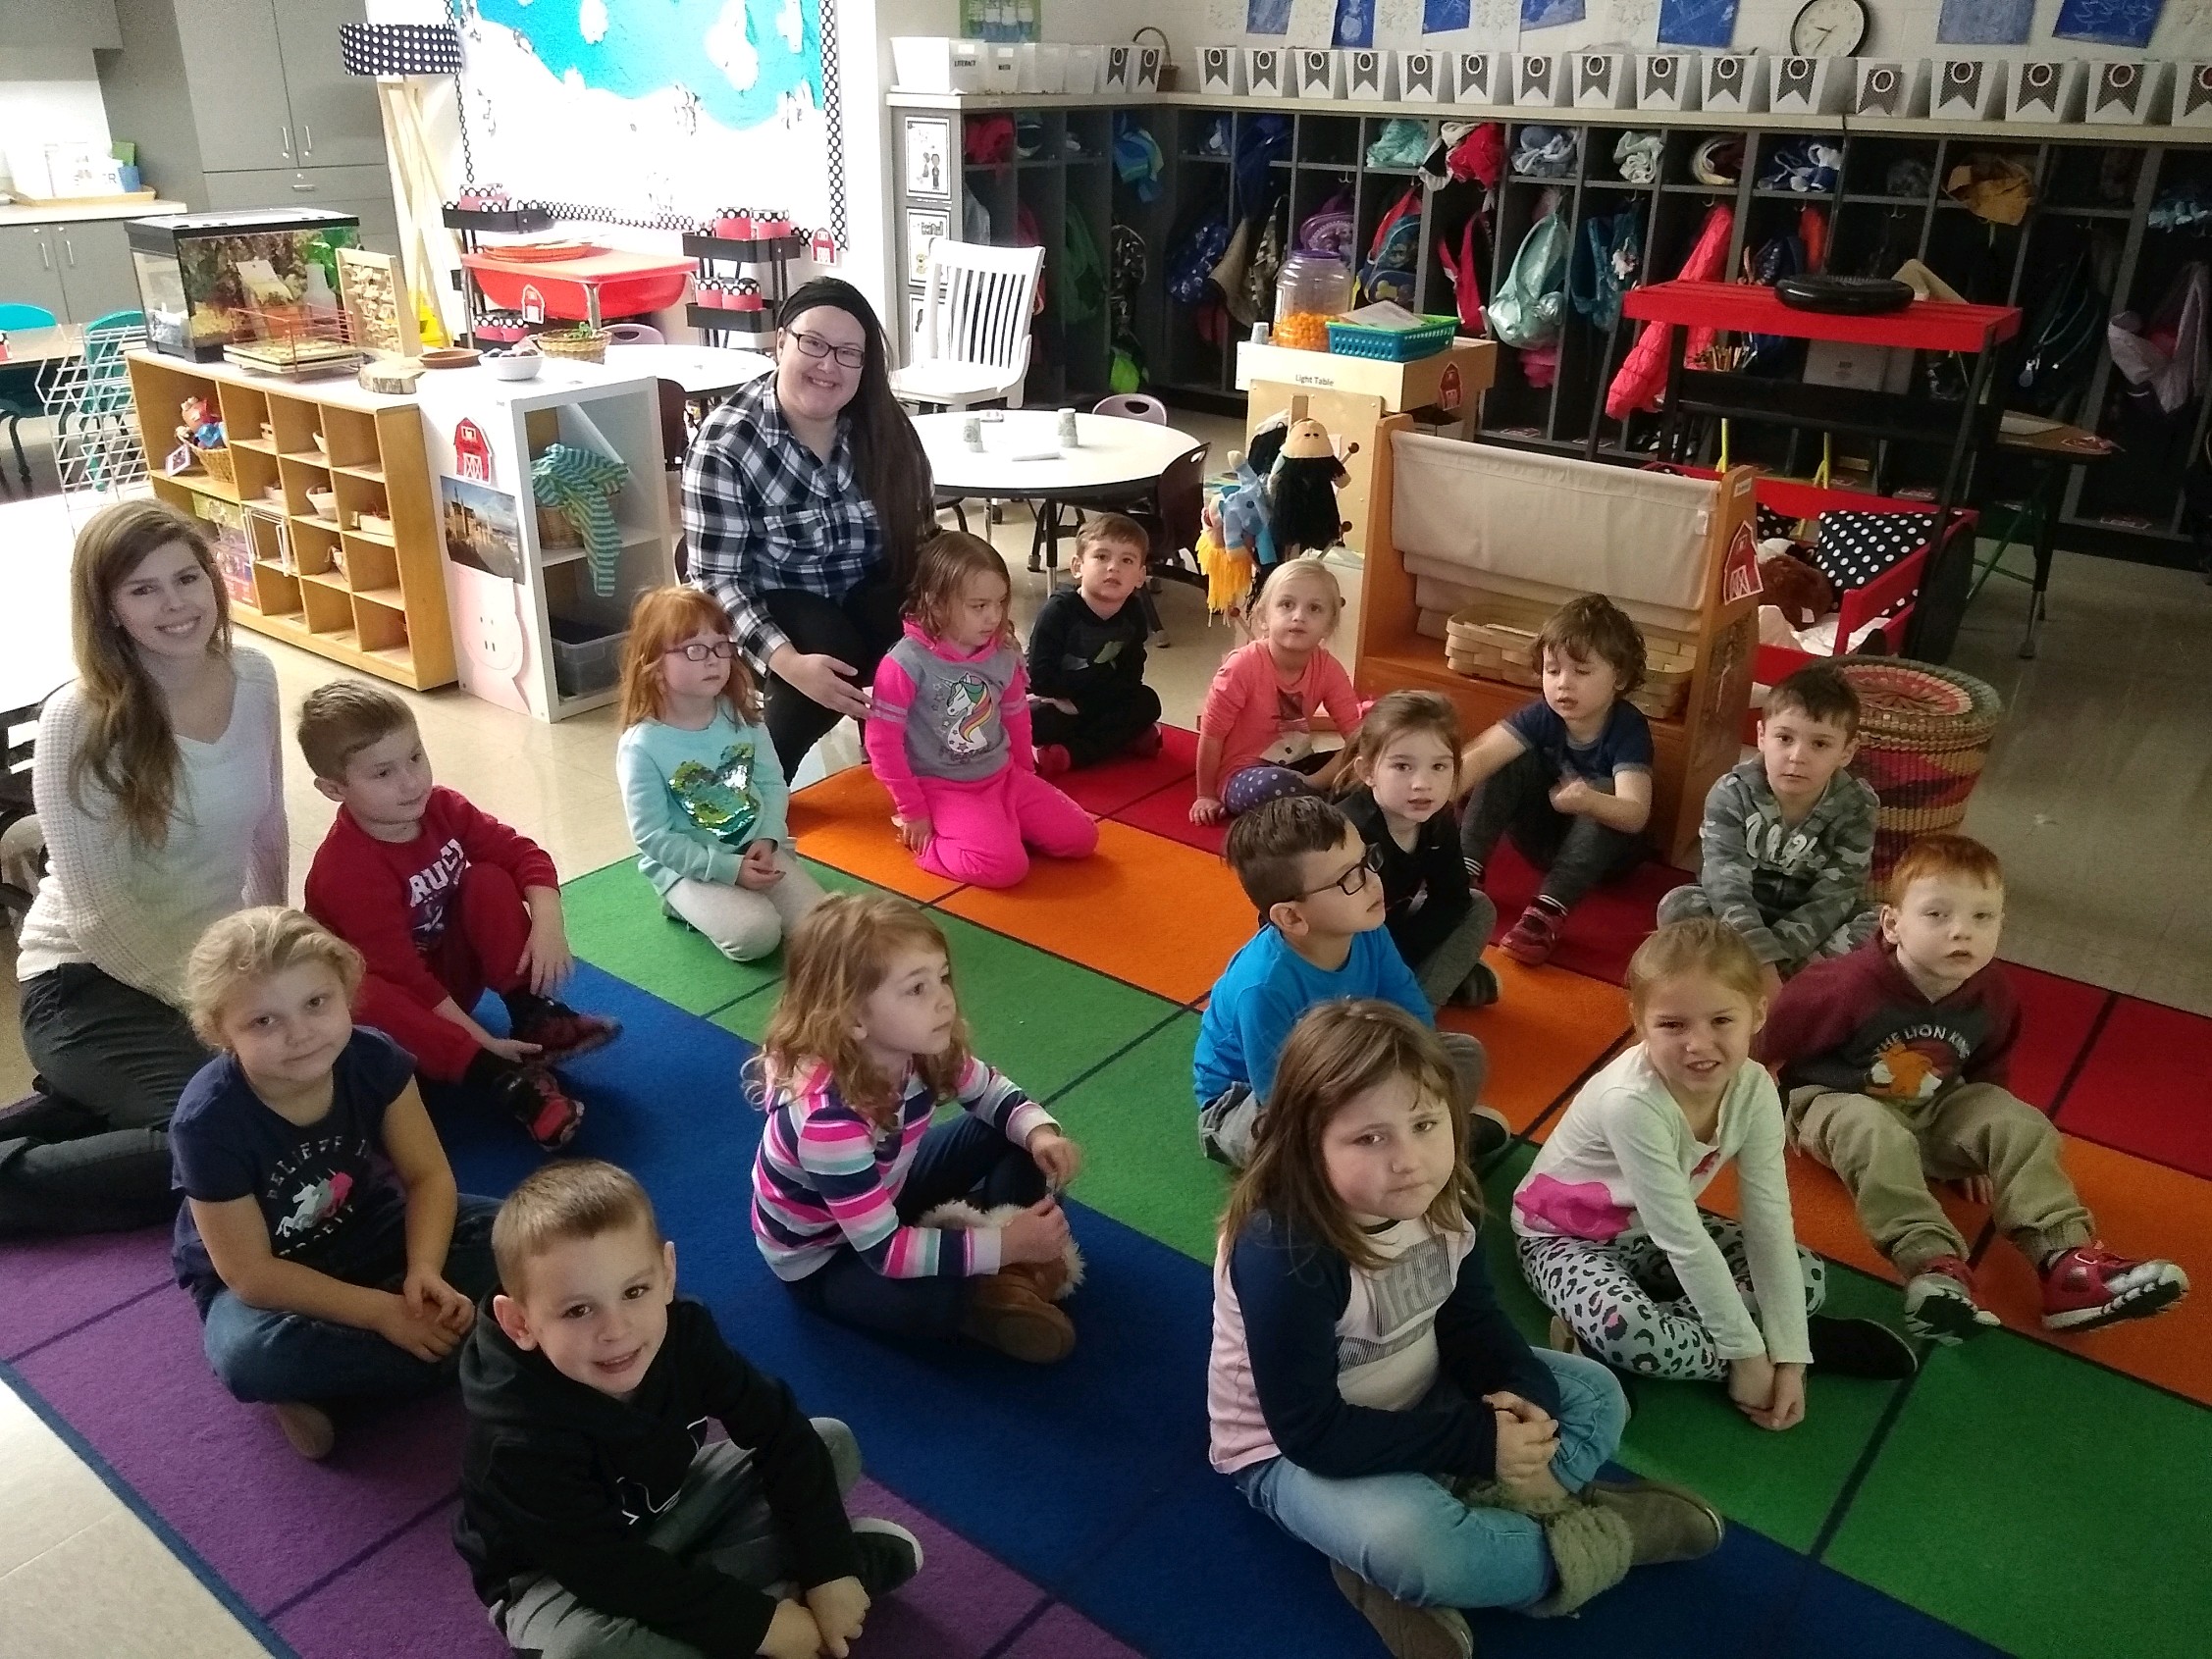 A group of 15 PRE-K kids inside a classroom along with their 2 teachers.